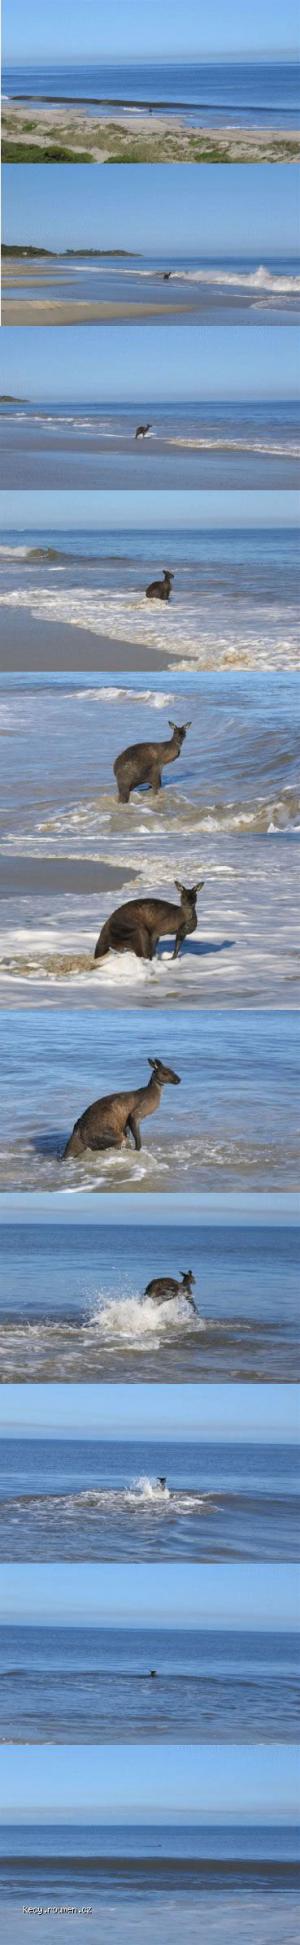 kangaroo suicide